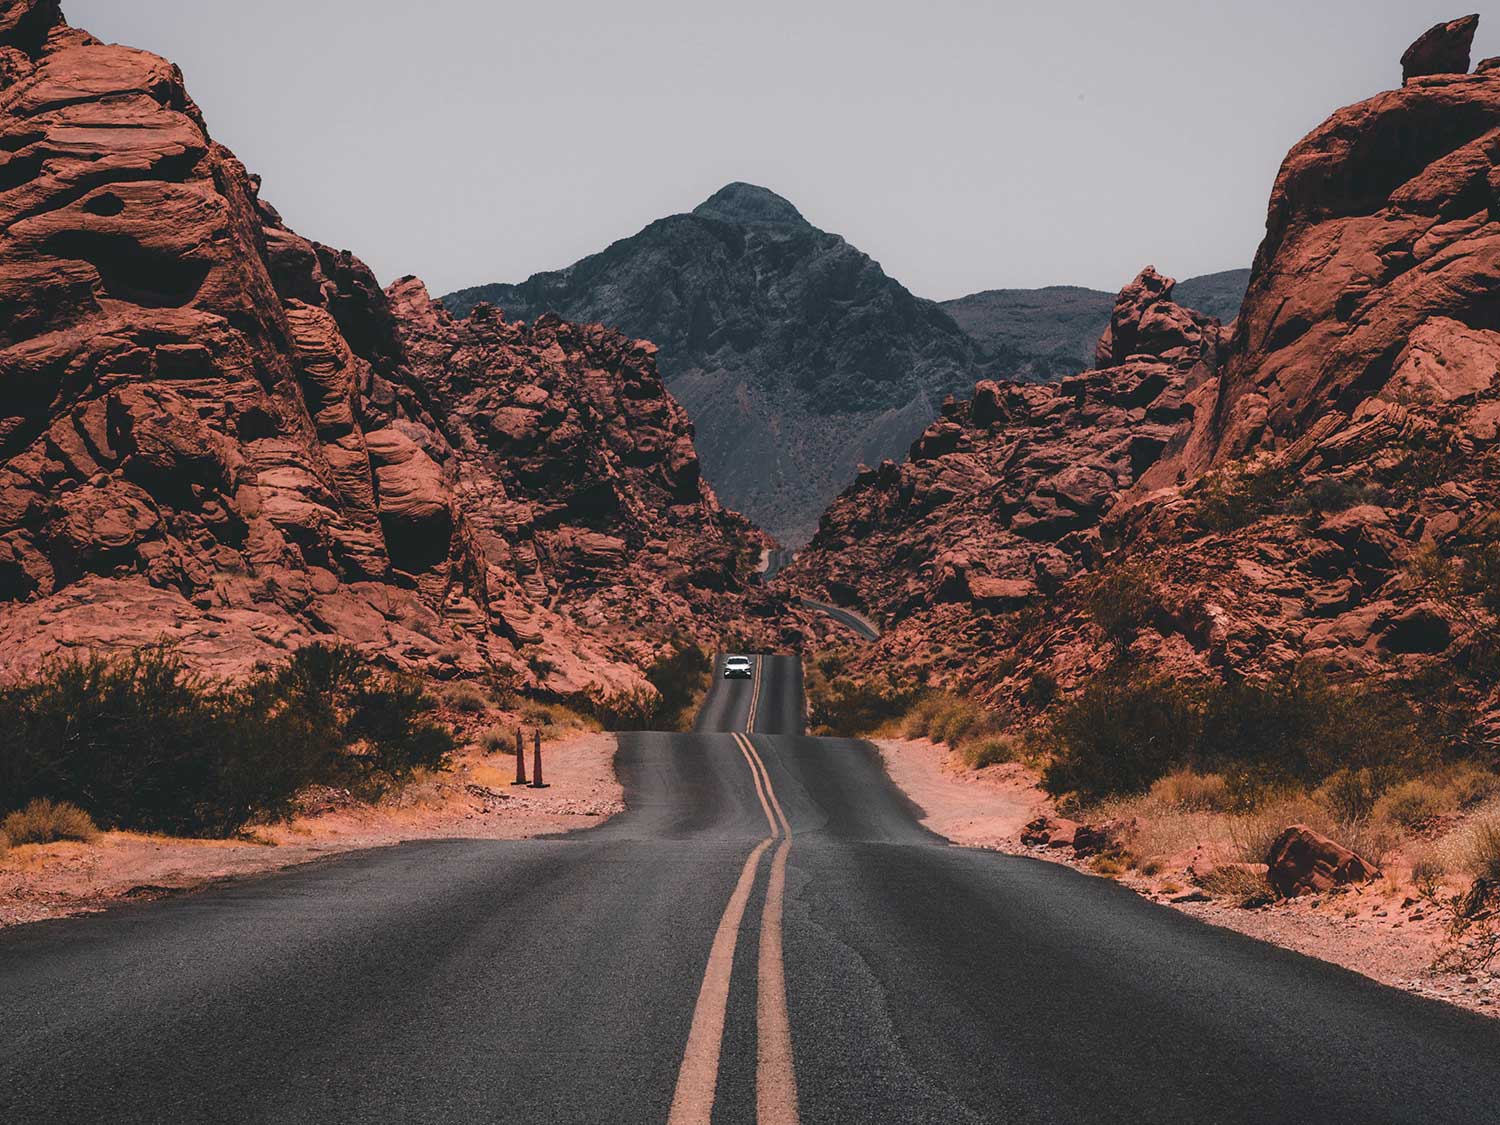 Road running through canyons